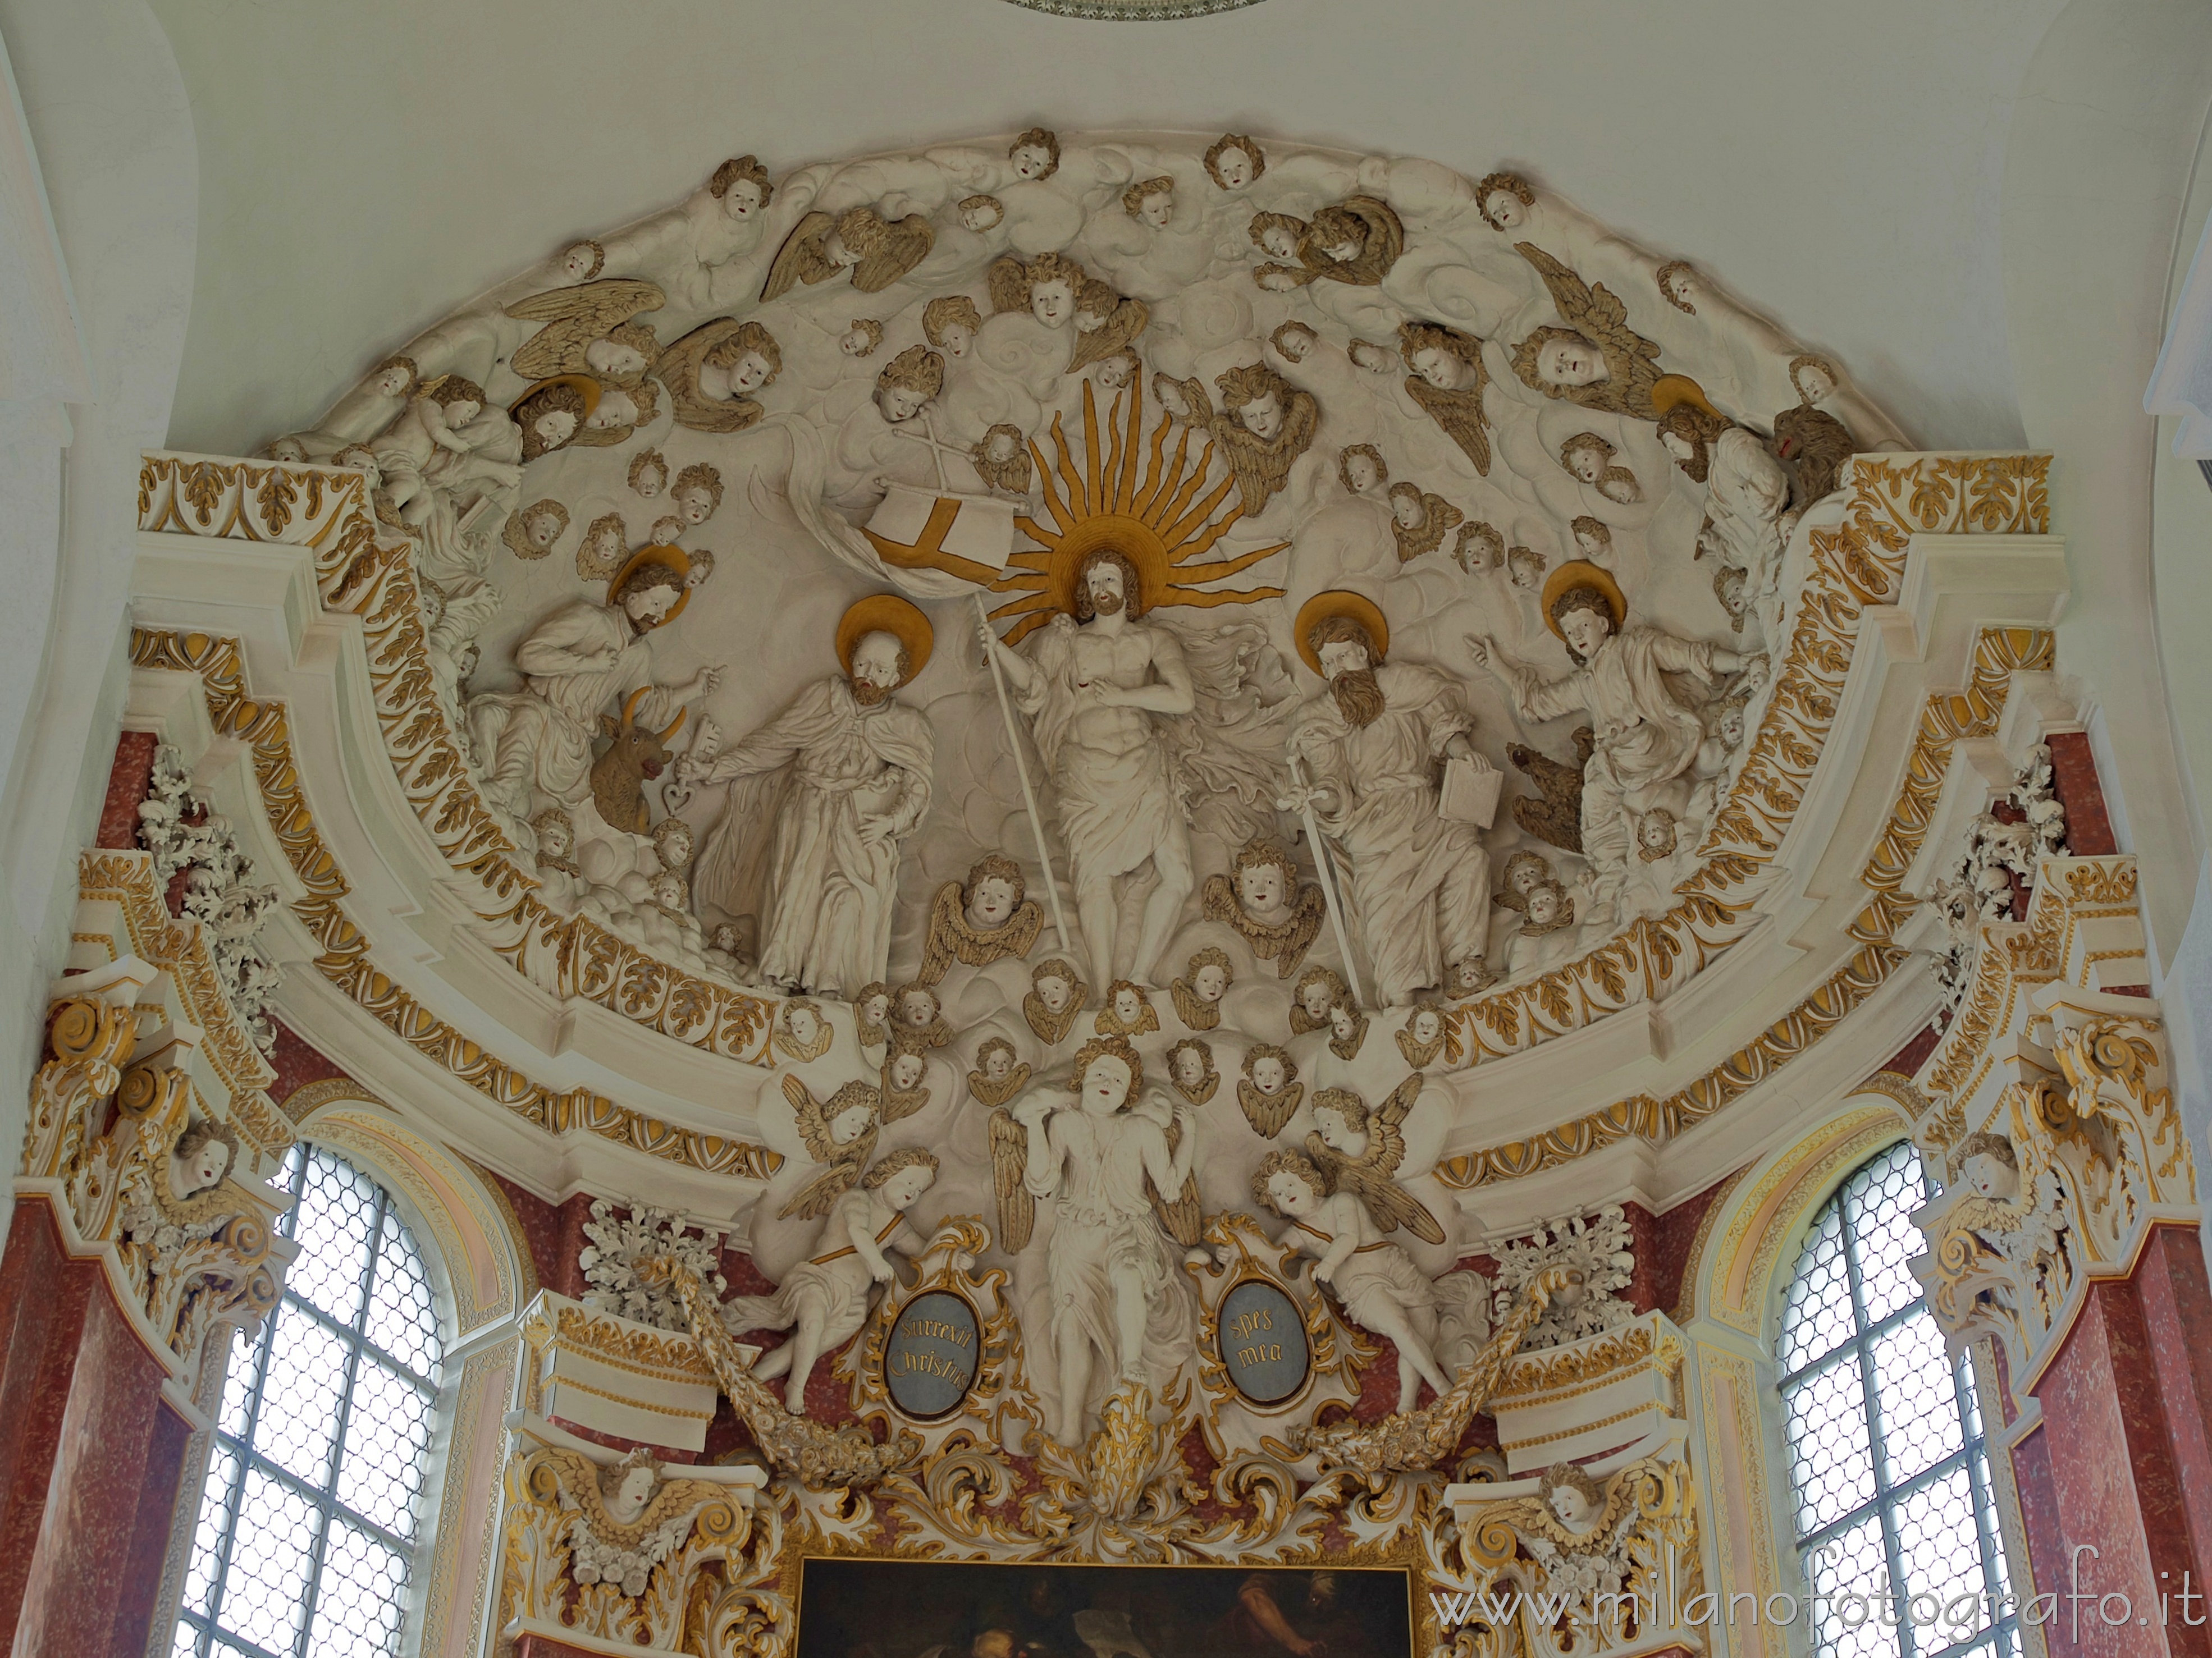 Rottenburg am Neckar (Germany): Decorated Aps of the church of the Sanctuary of WeggenTal - Rottenburg am Neckar (Germany)